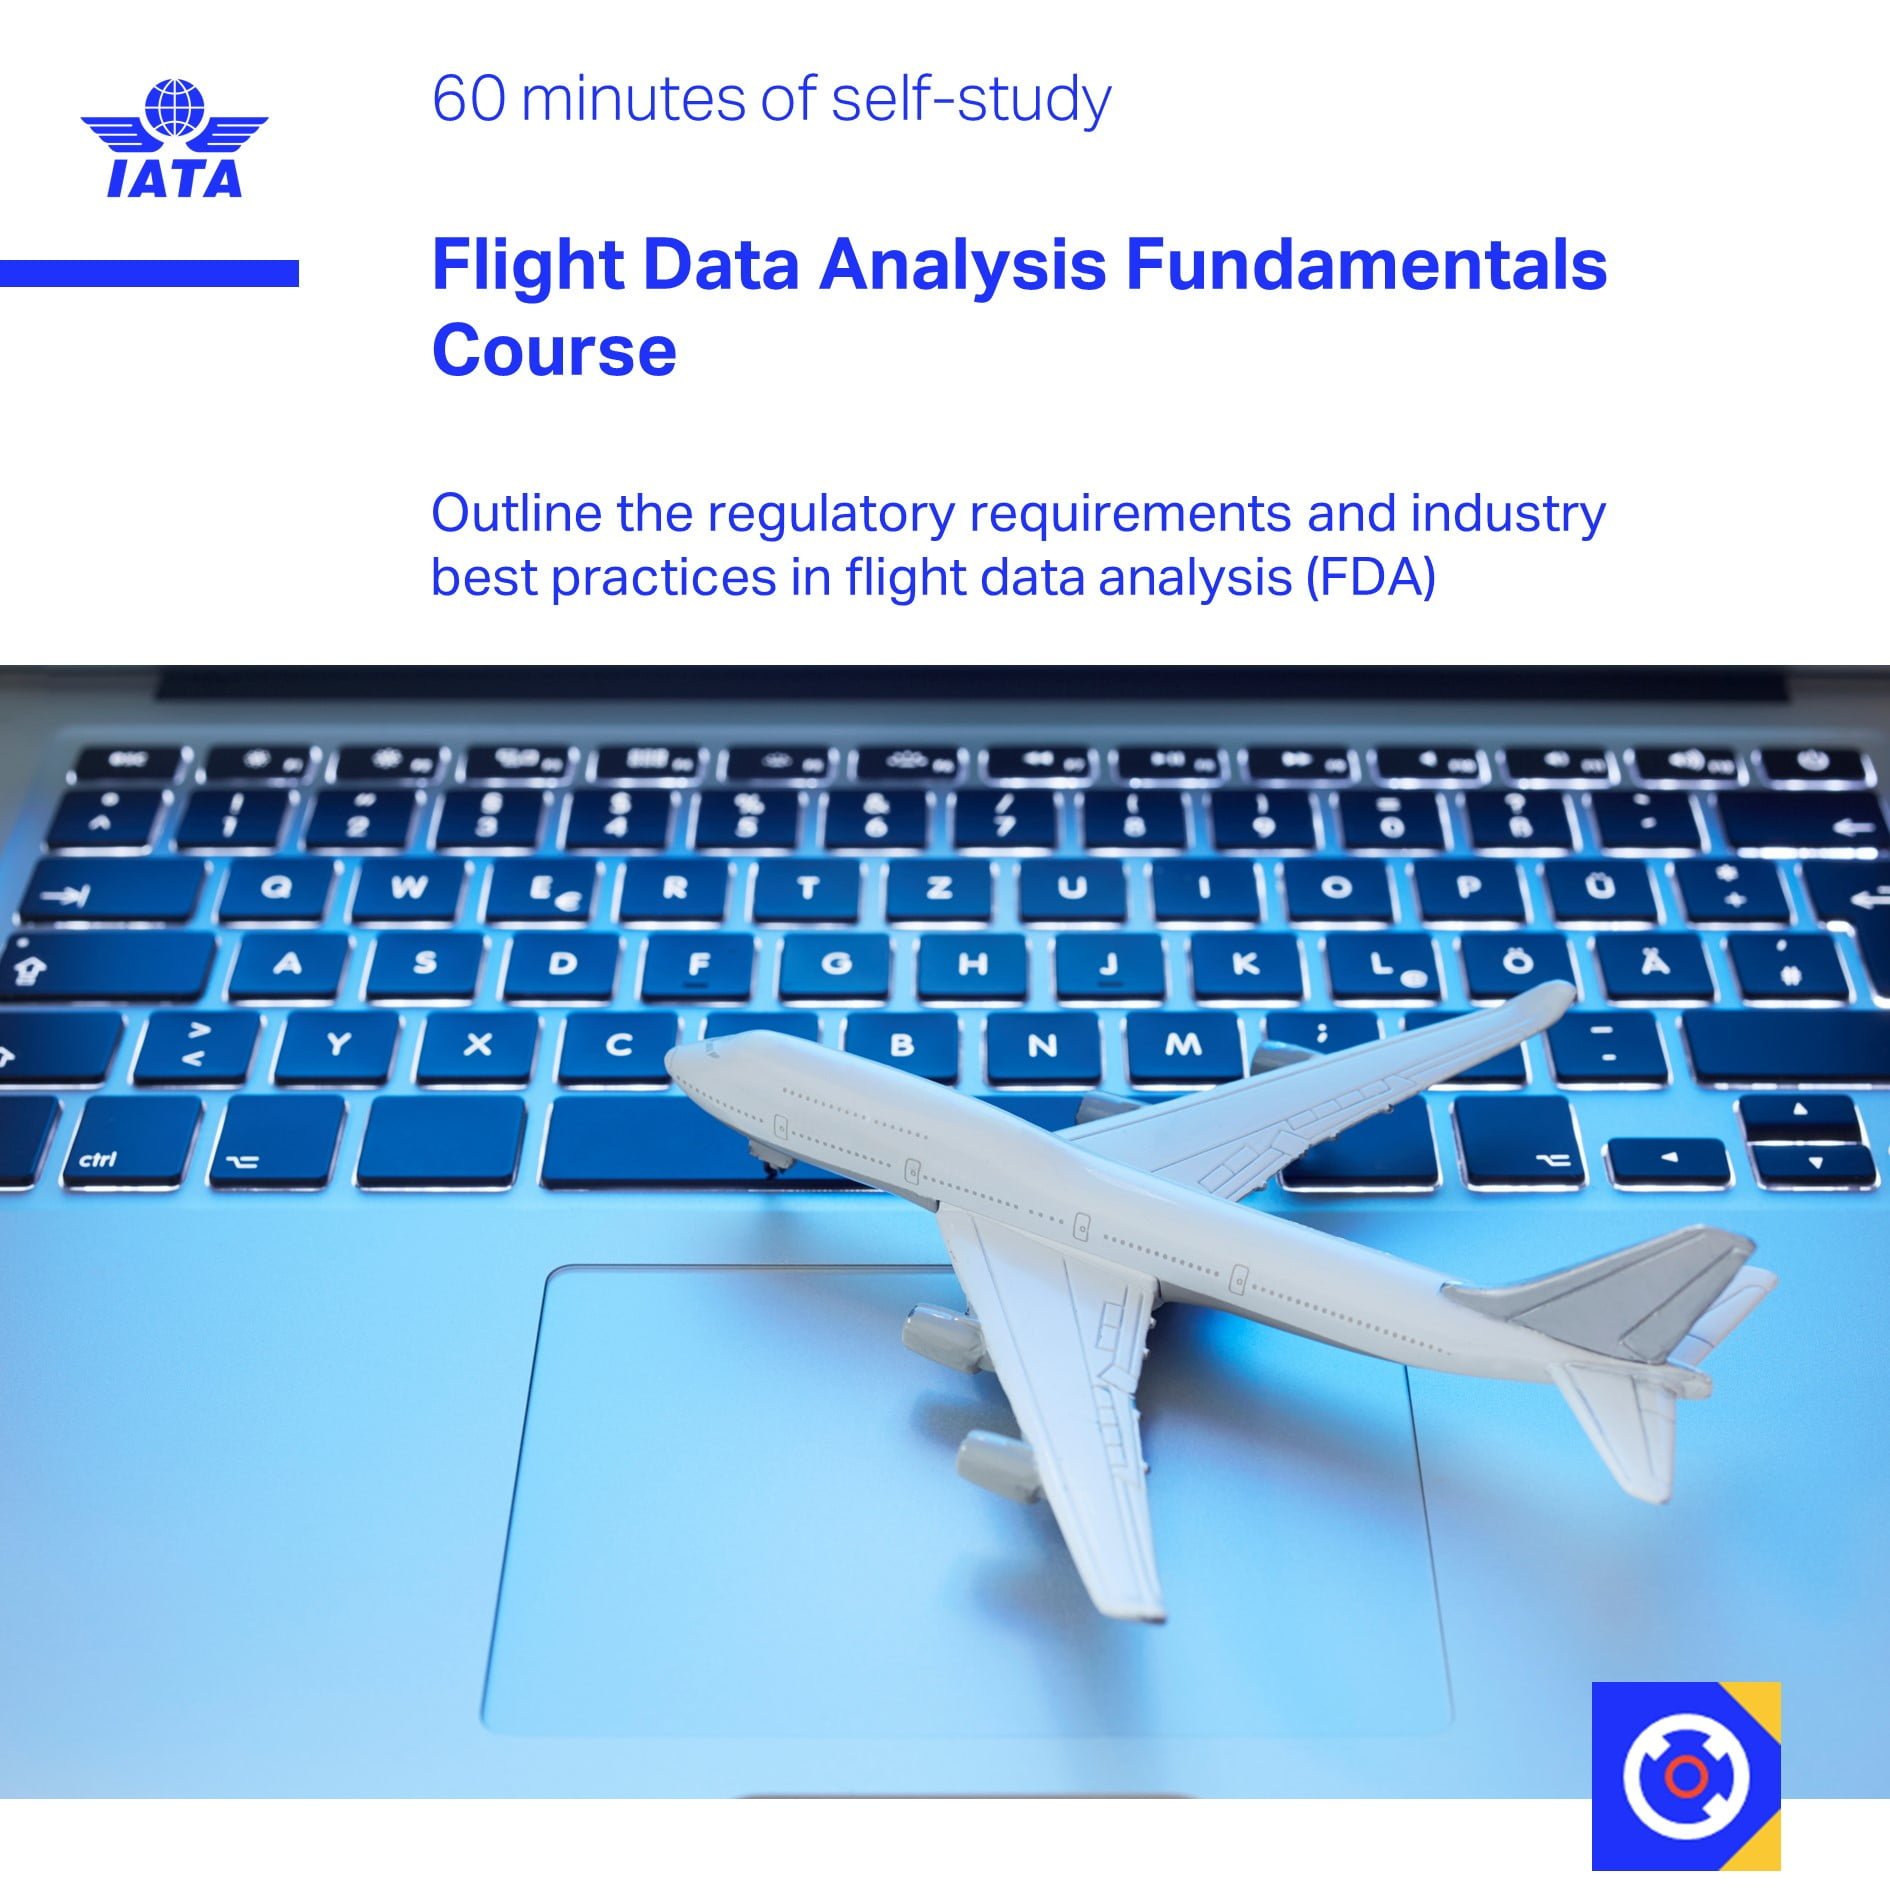 Flight Data Analysis Fundamentals (e-learning)